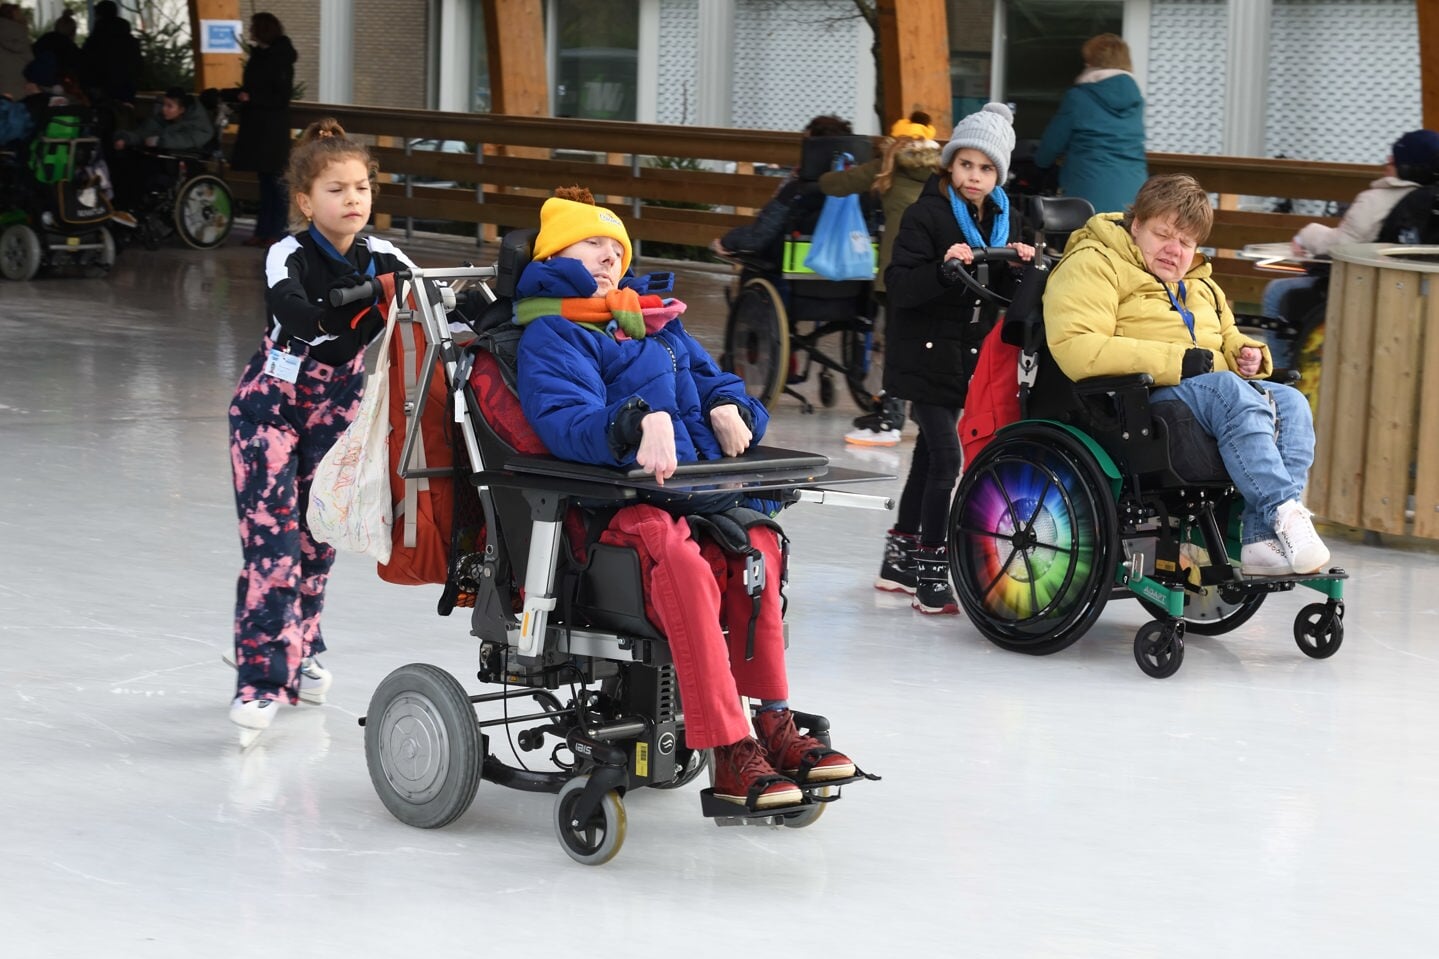 Wheels in Ice bezorgt bewoners Zonhove veel plezier